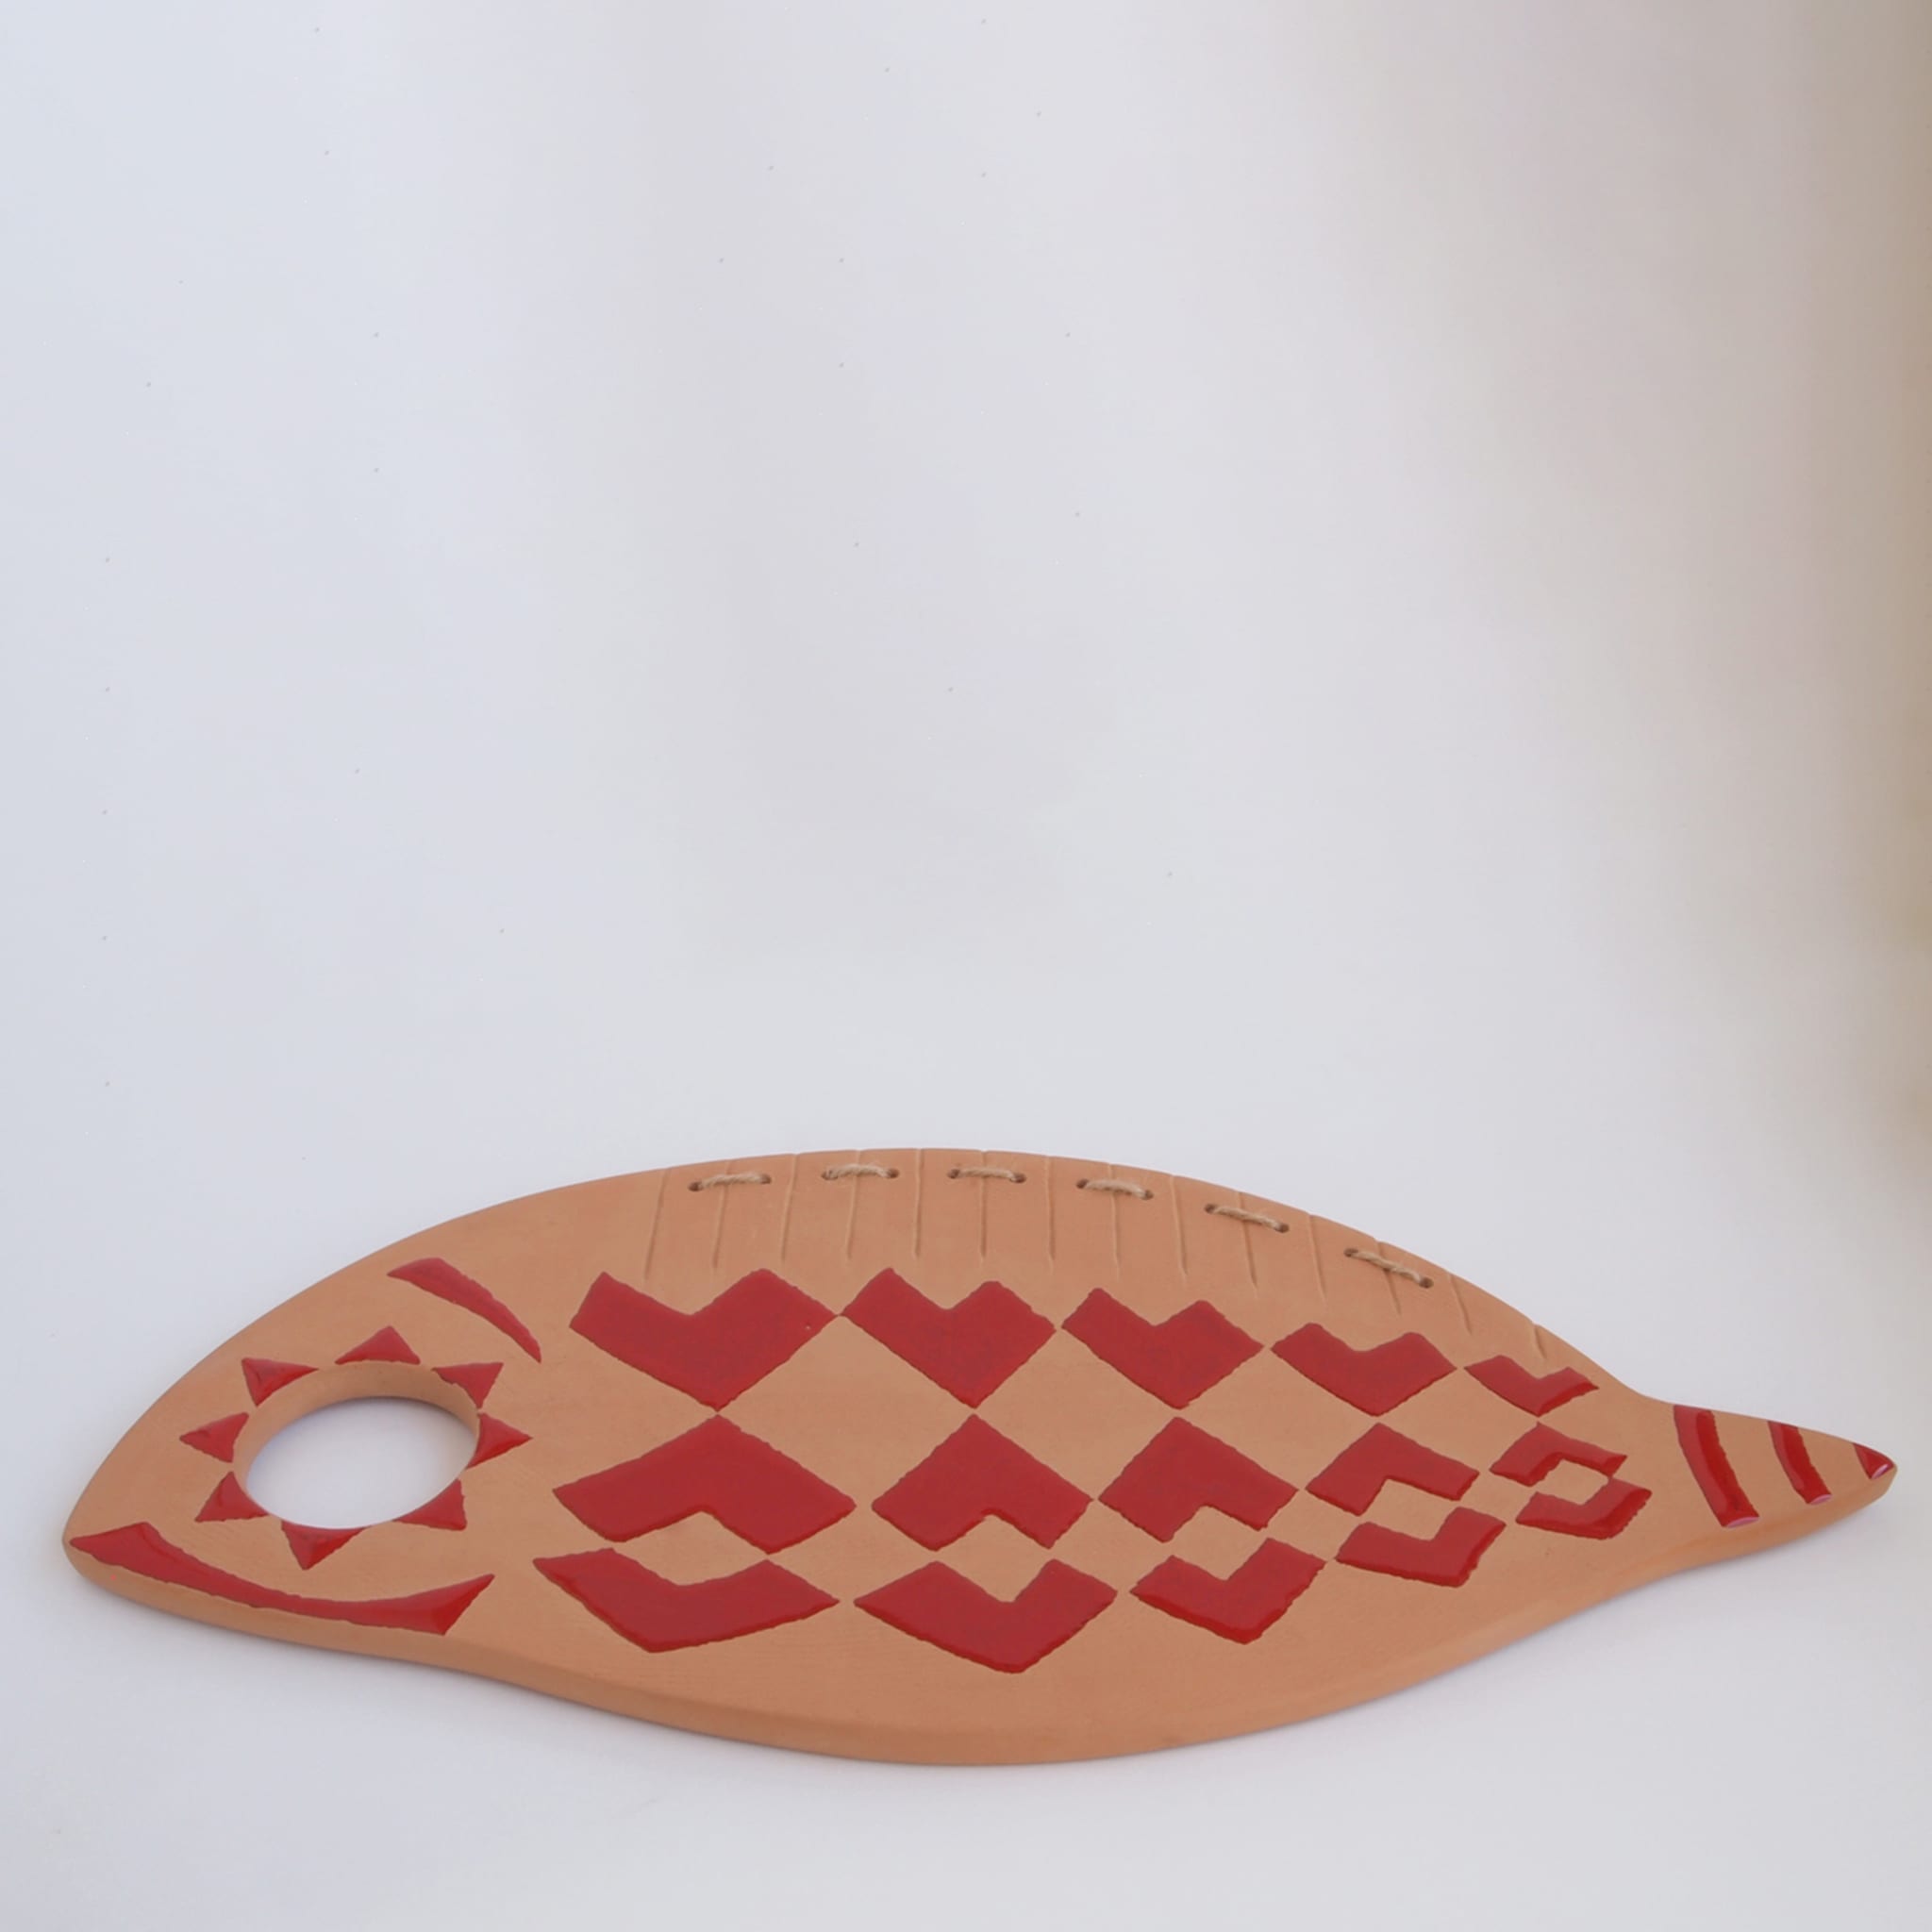 Terracotta rossa simile a un pesce  - Vista alternativa 2